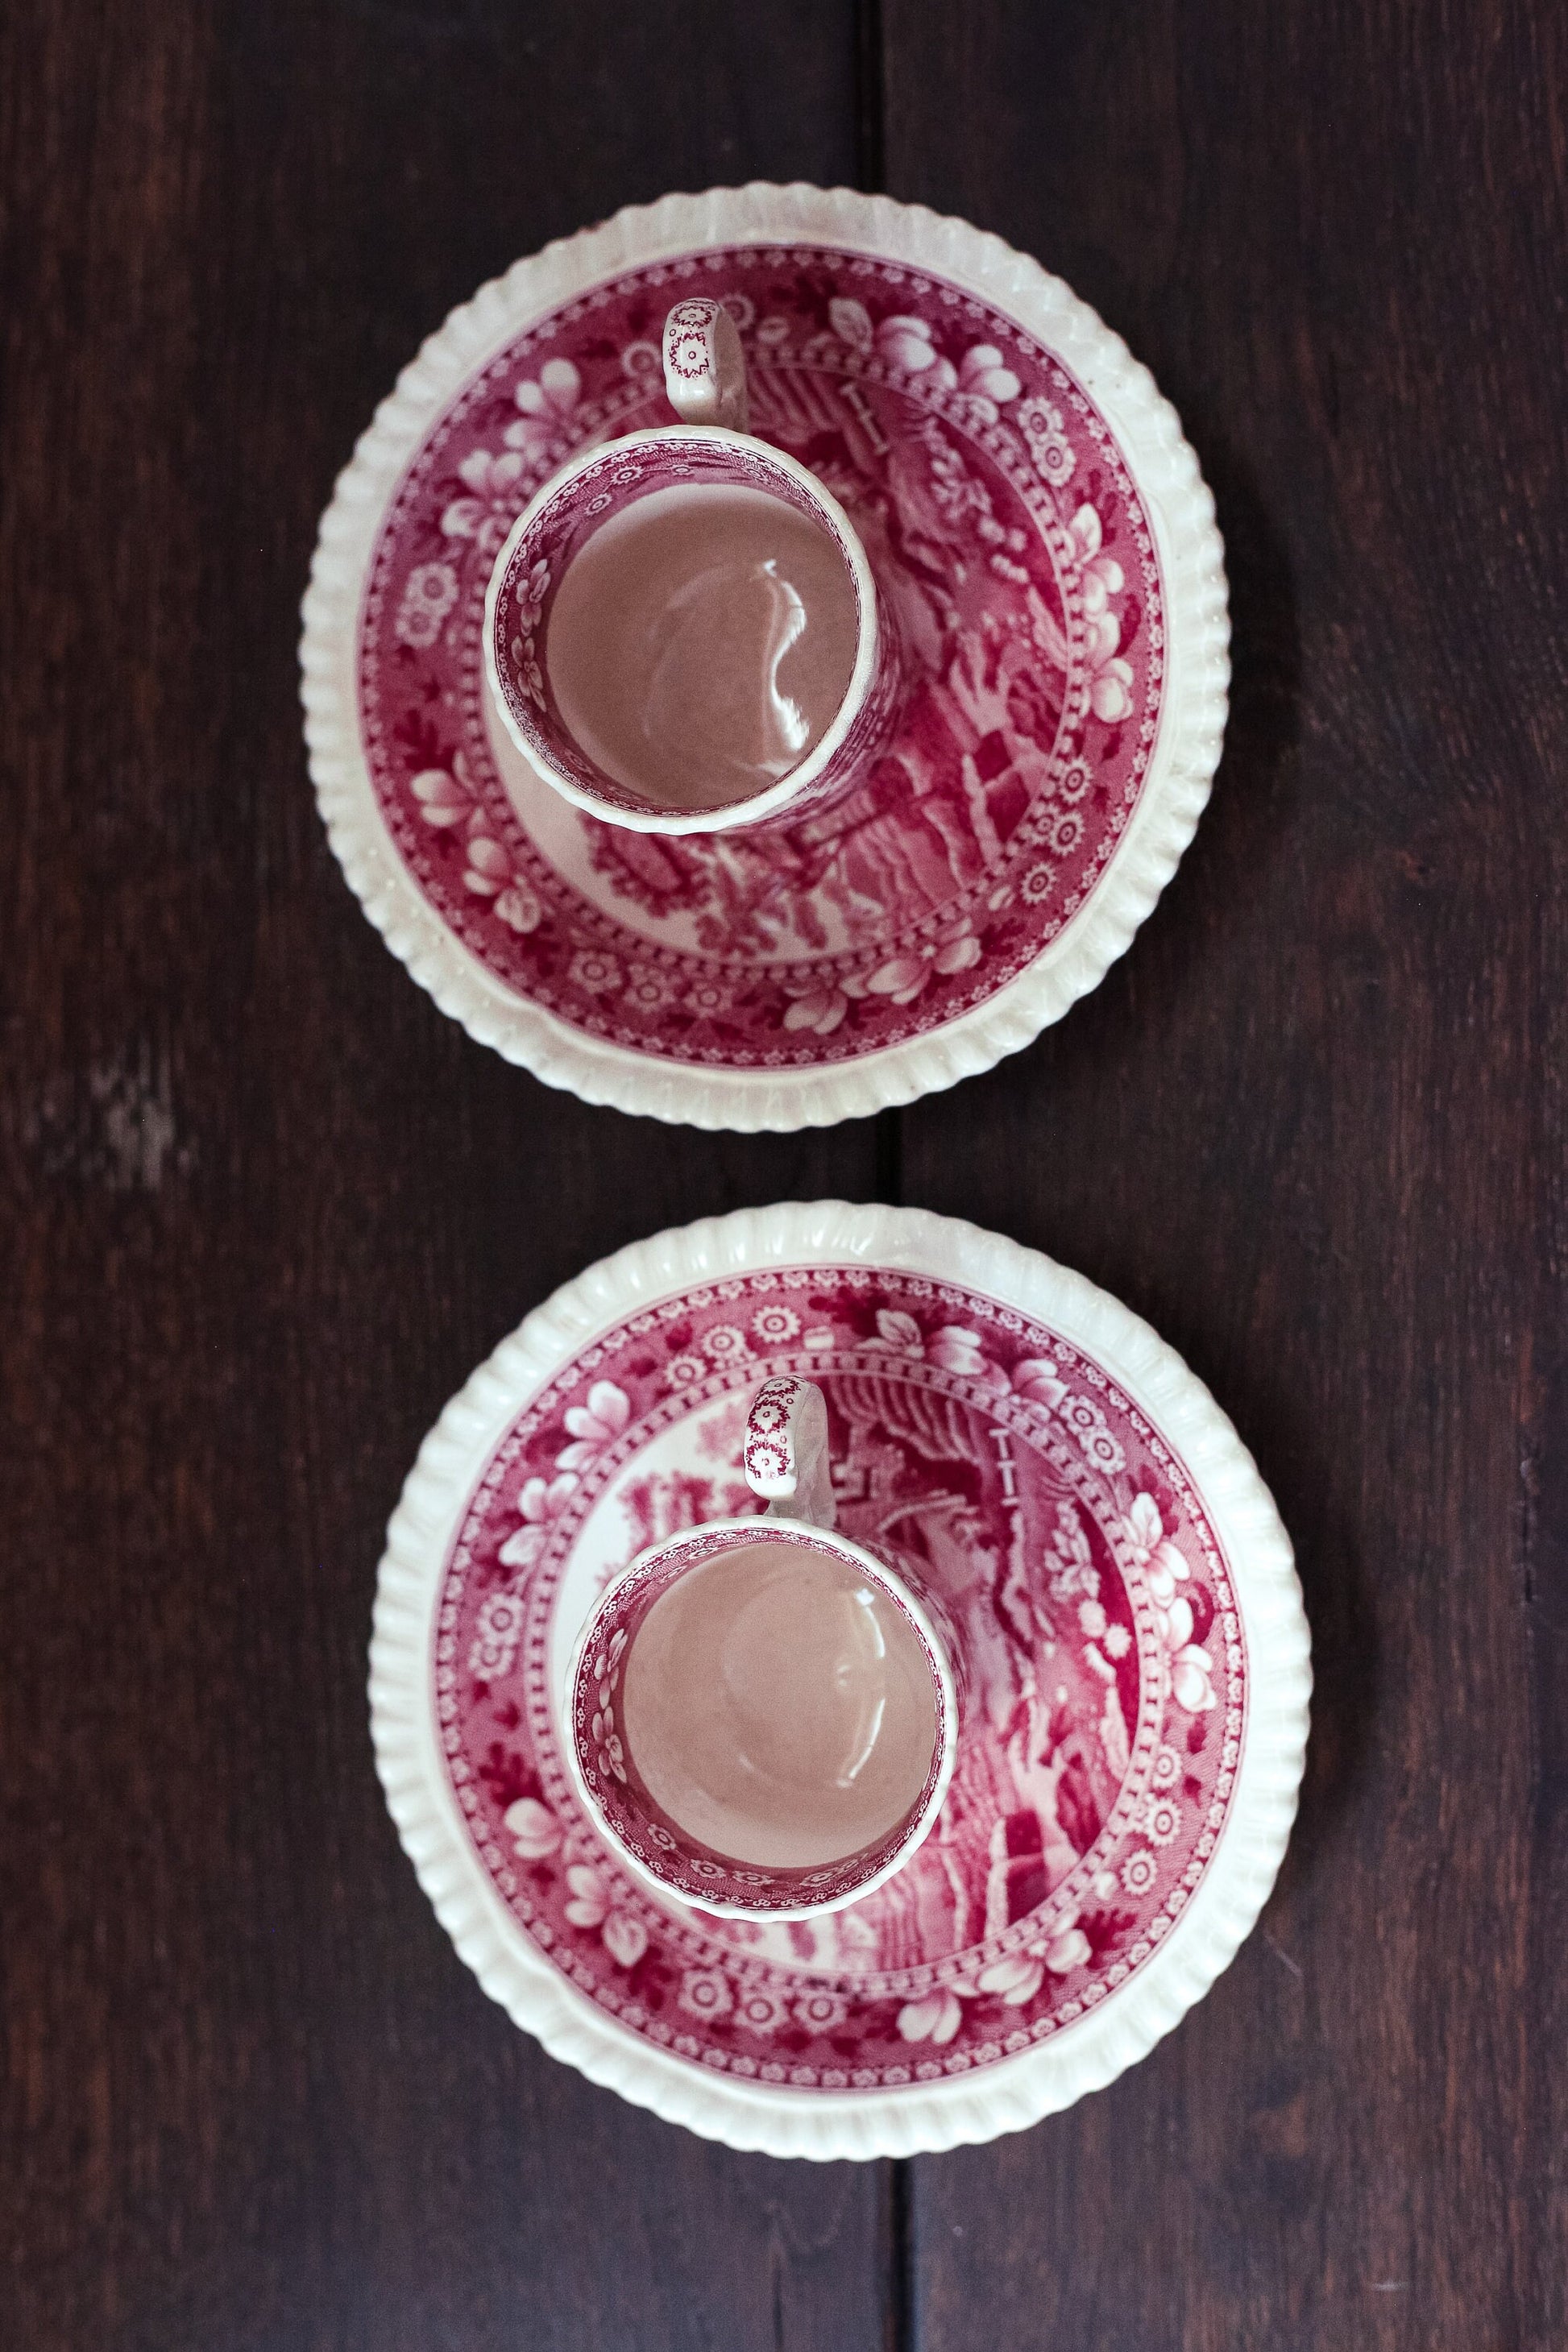 Pair of Copeland Spode Flat Demitasse Cups & Saucers - Vintage Spode England Pink Tower Toleware Tea set Old Mark